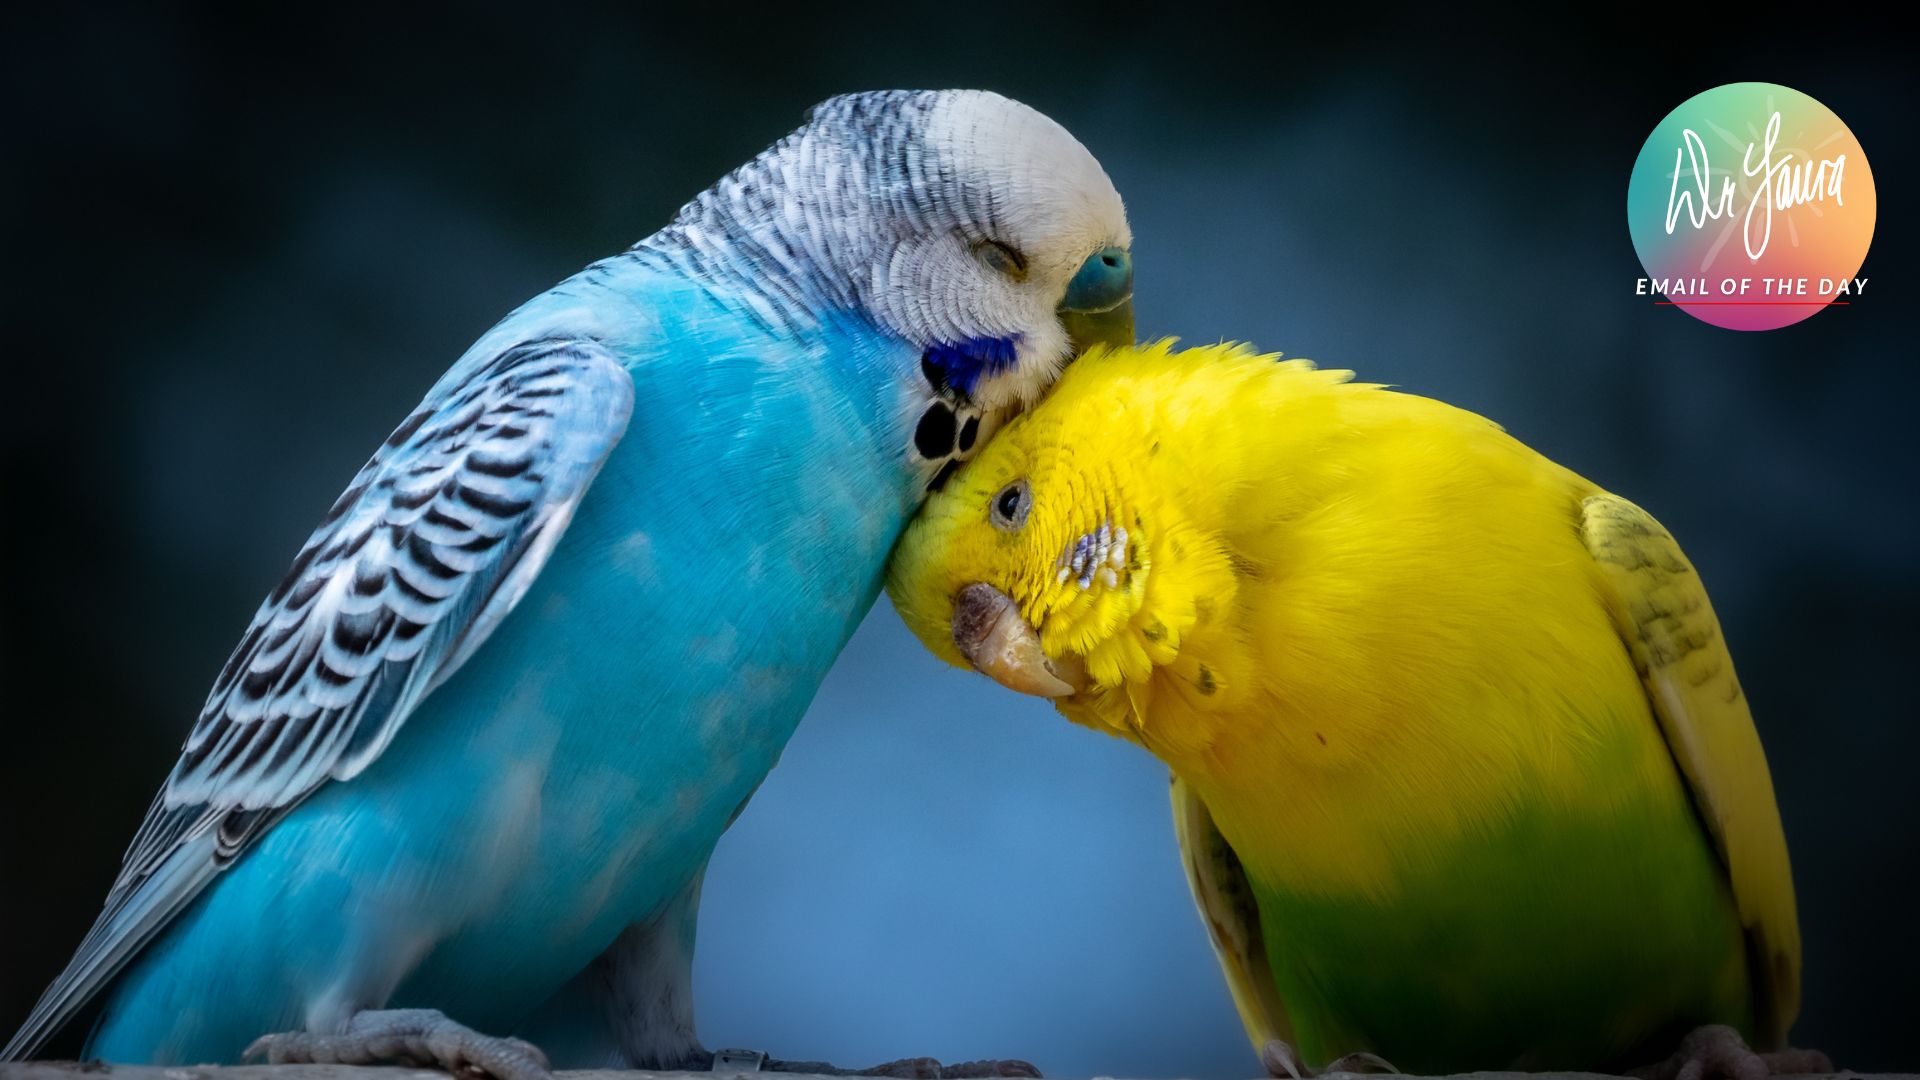 Yellow bird places head underneath head of blue bird